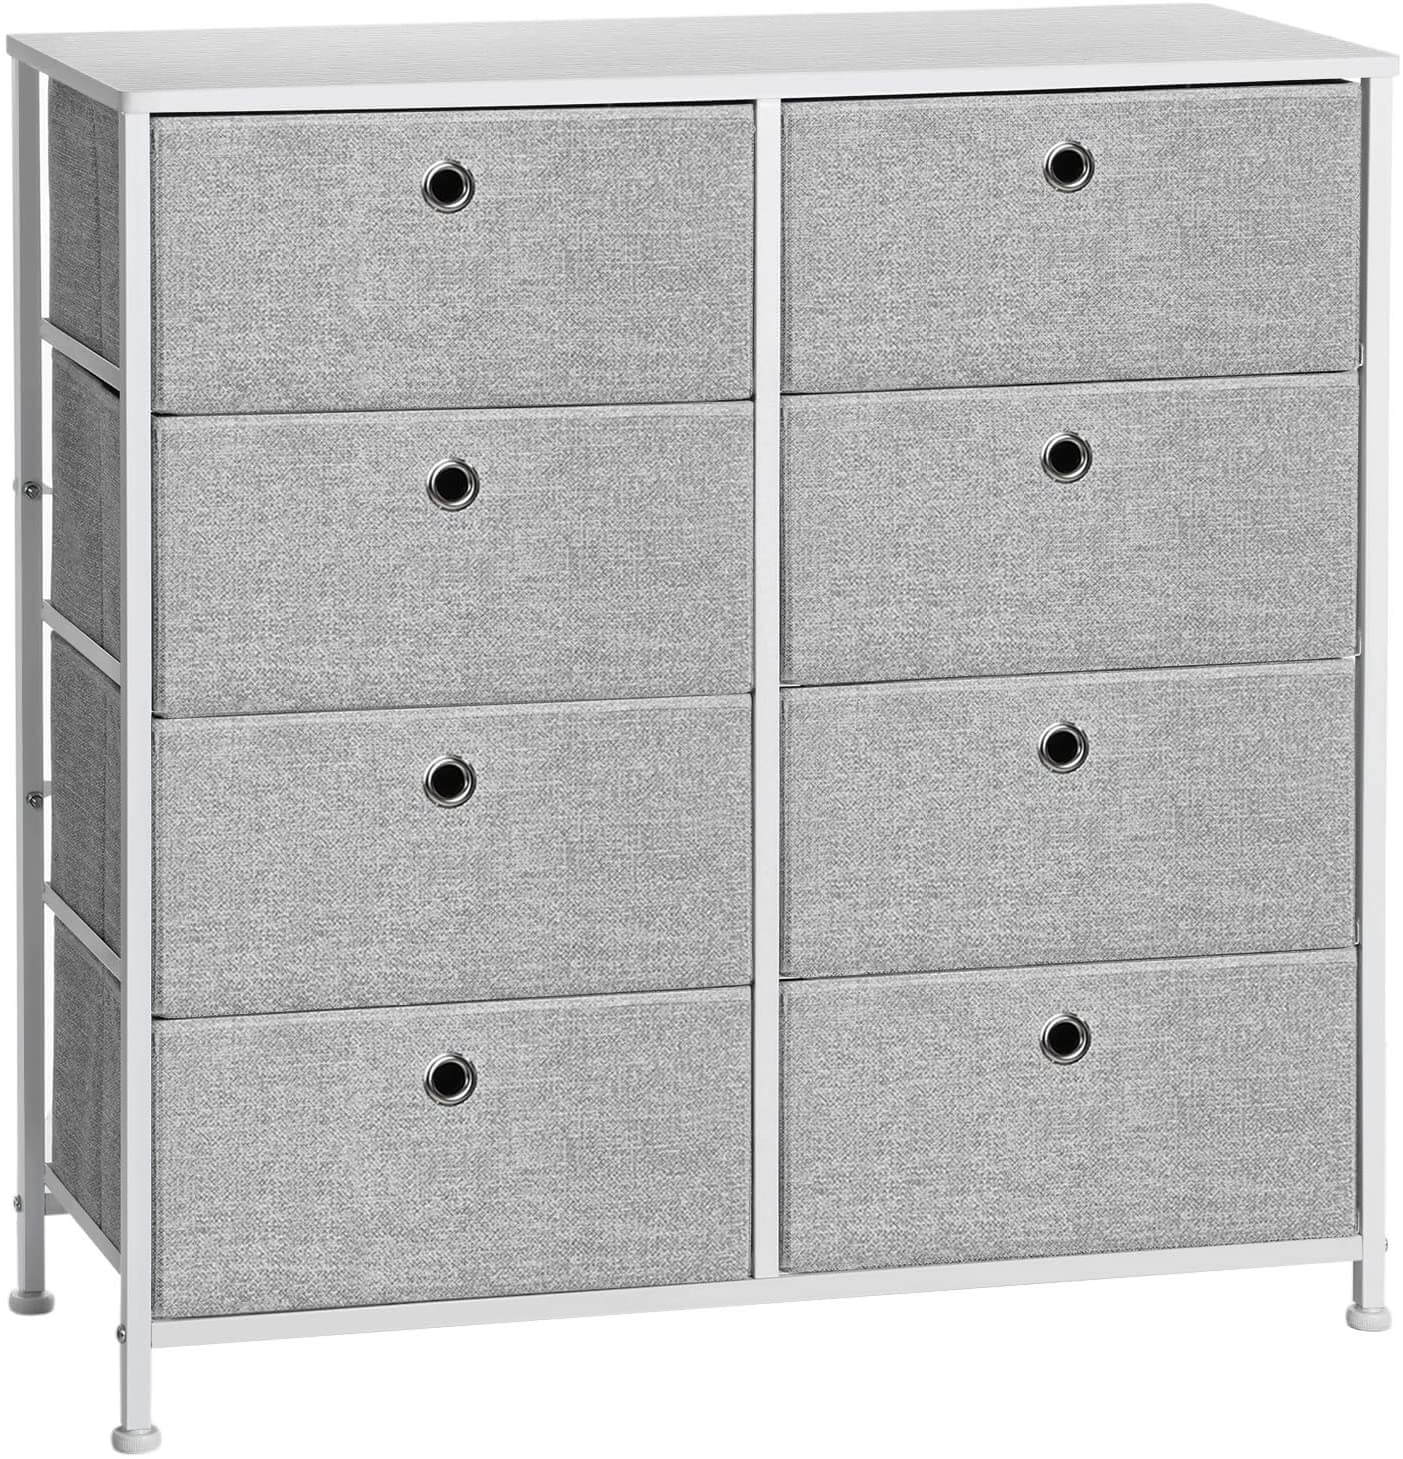 Gray & White 4-Tier Storage Dresser with Fabric Drawers - HWLEXTRA